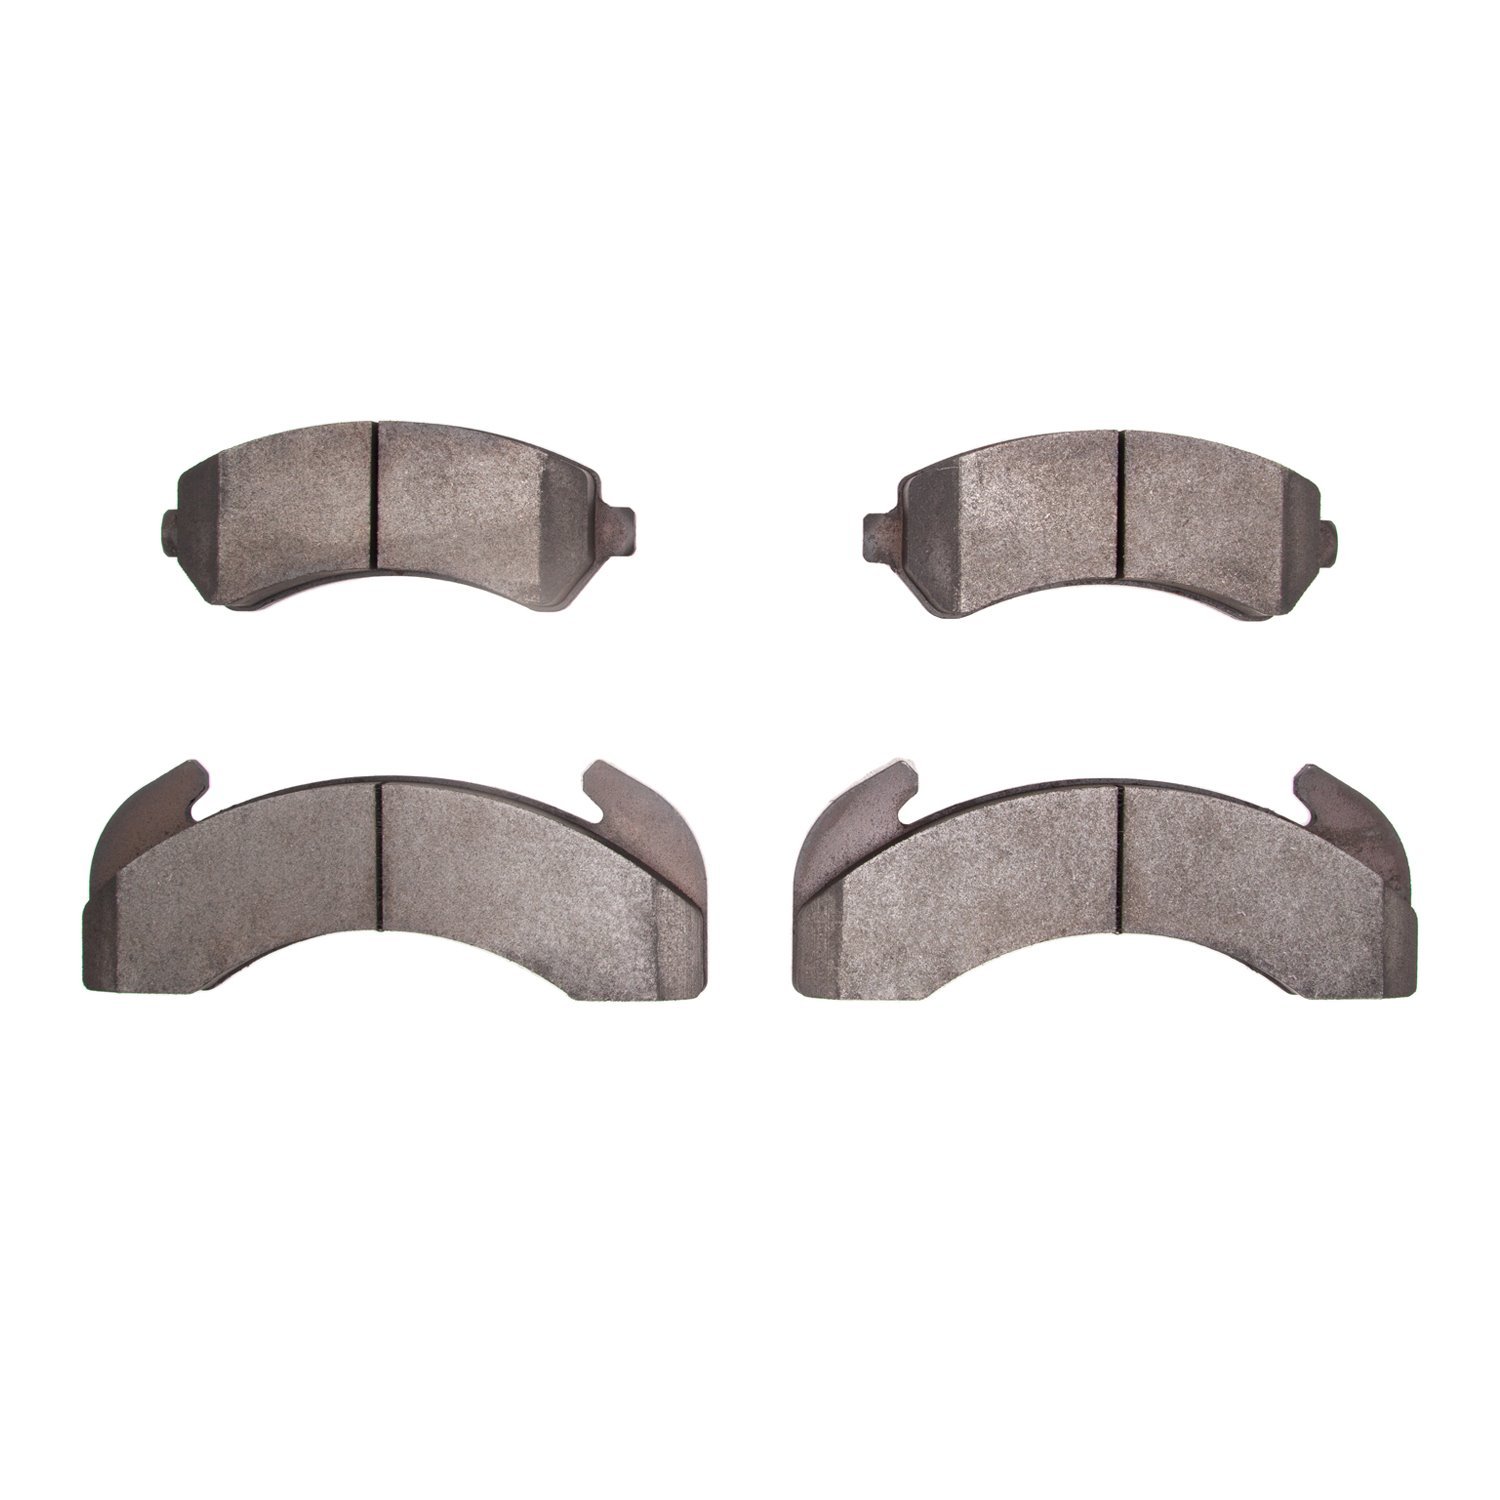 Semi-Metallic Brake Pads, 1979-2012 Fits Multiple Makes/Models, Position: Front & Rear